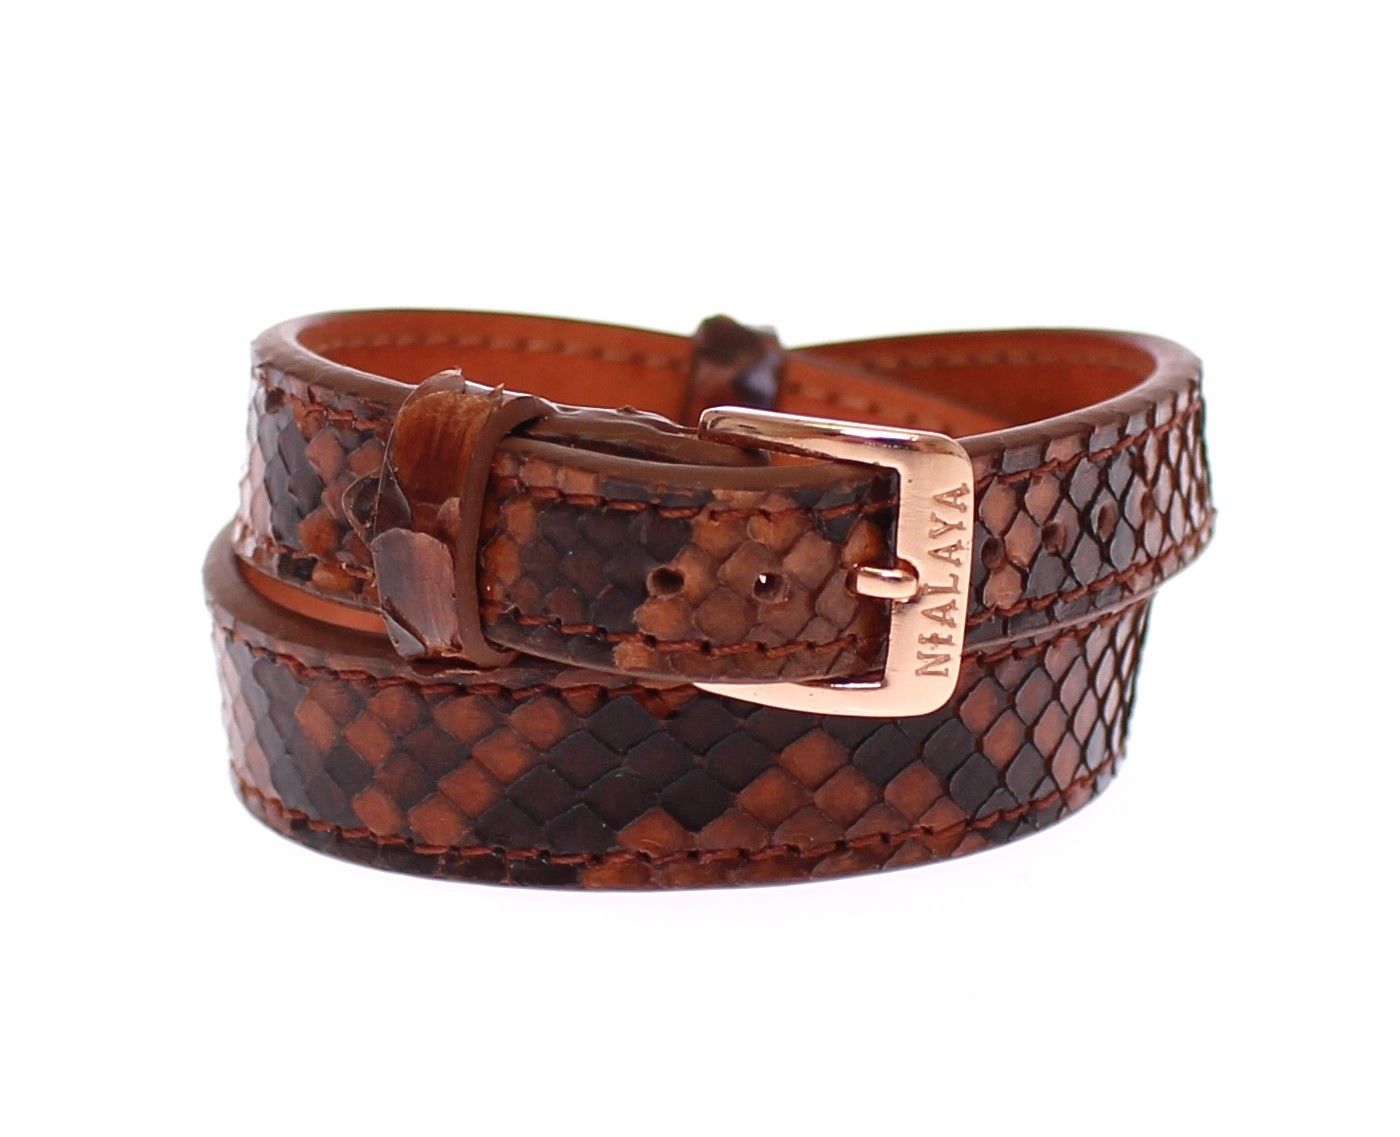 Chic Snakeskin Leather & Gold Cuff Bracelet